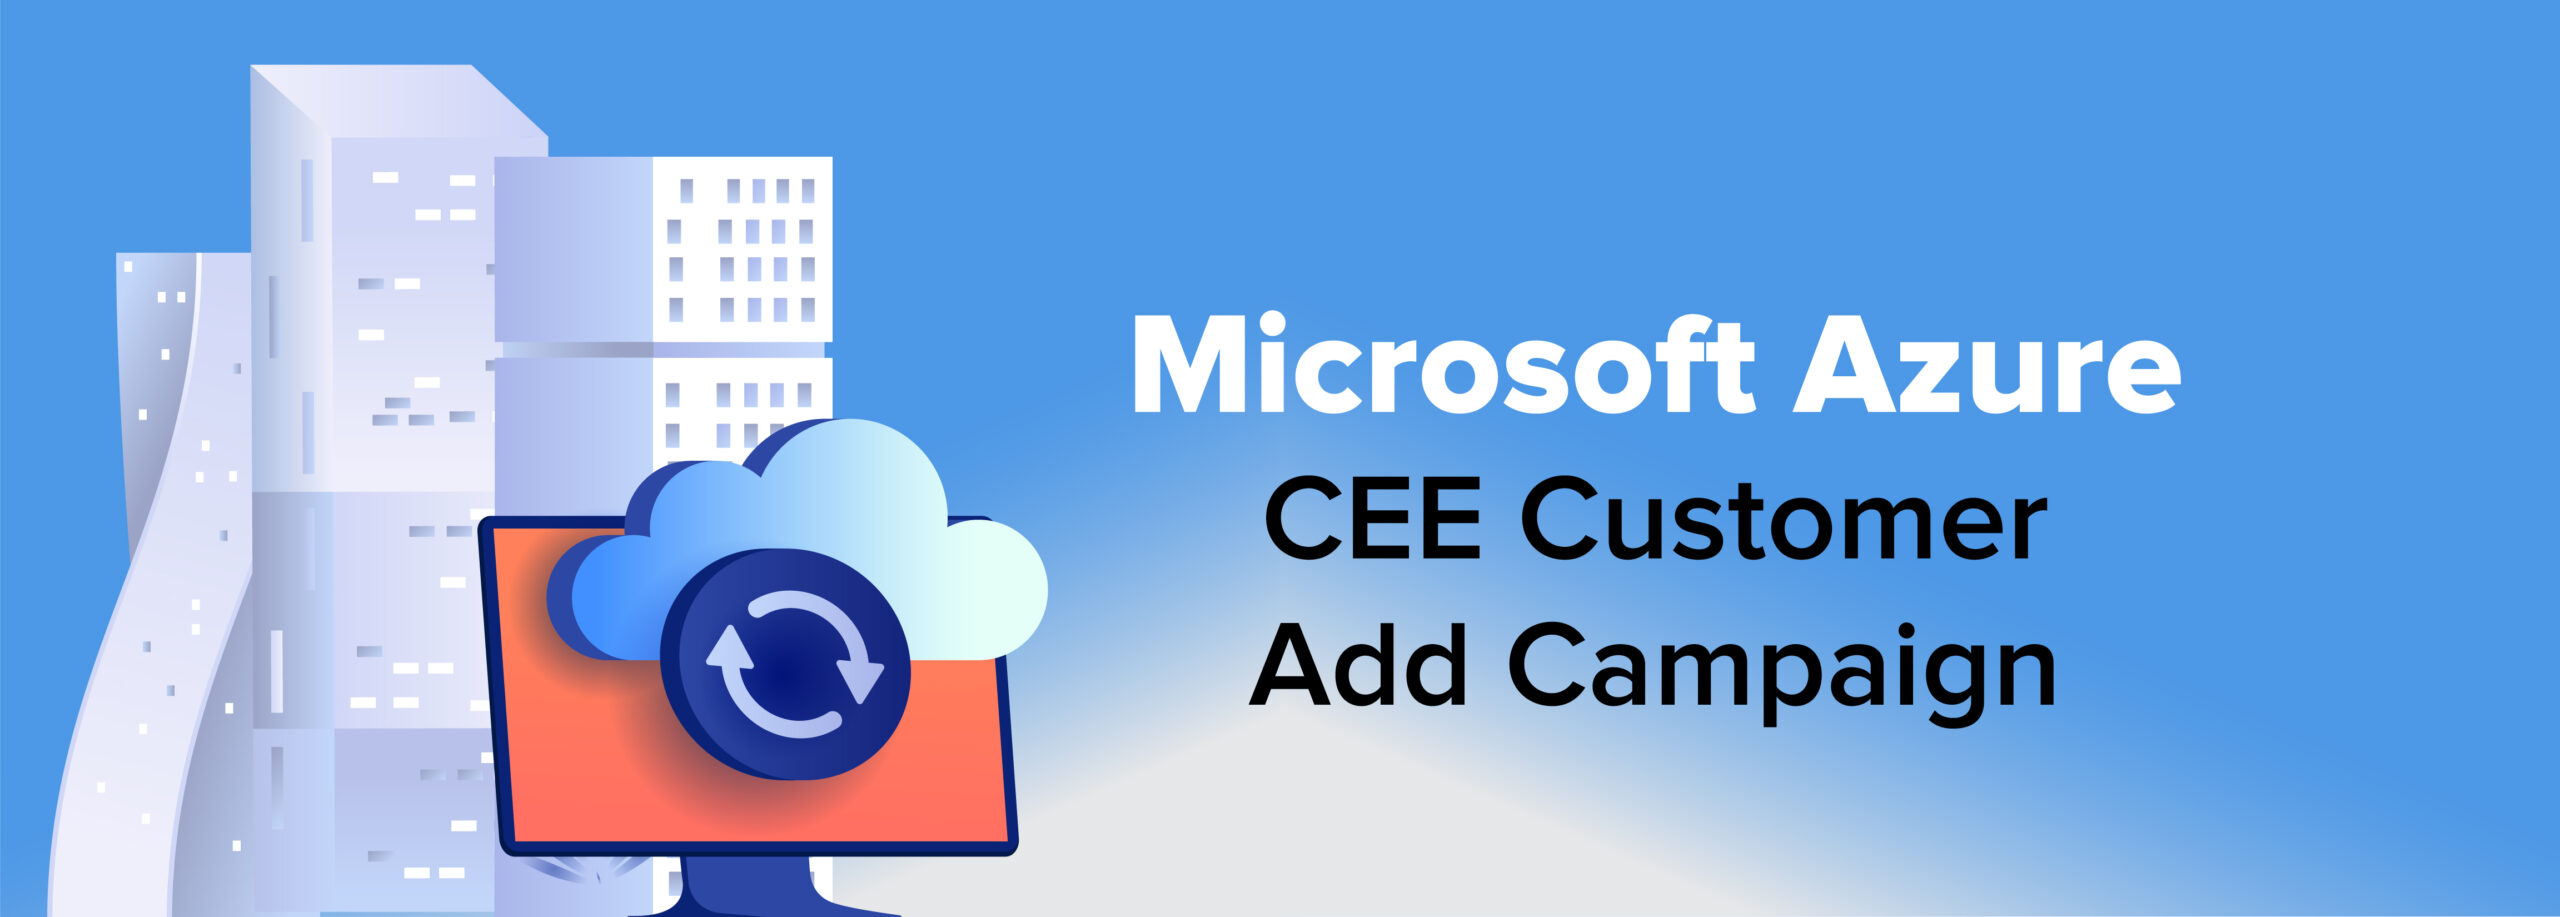 Microsoft Azure “CEE Customer Add Campaign”